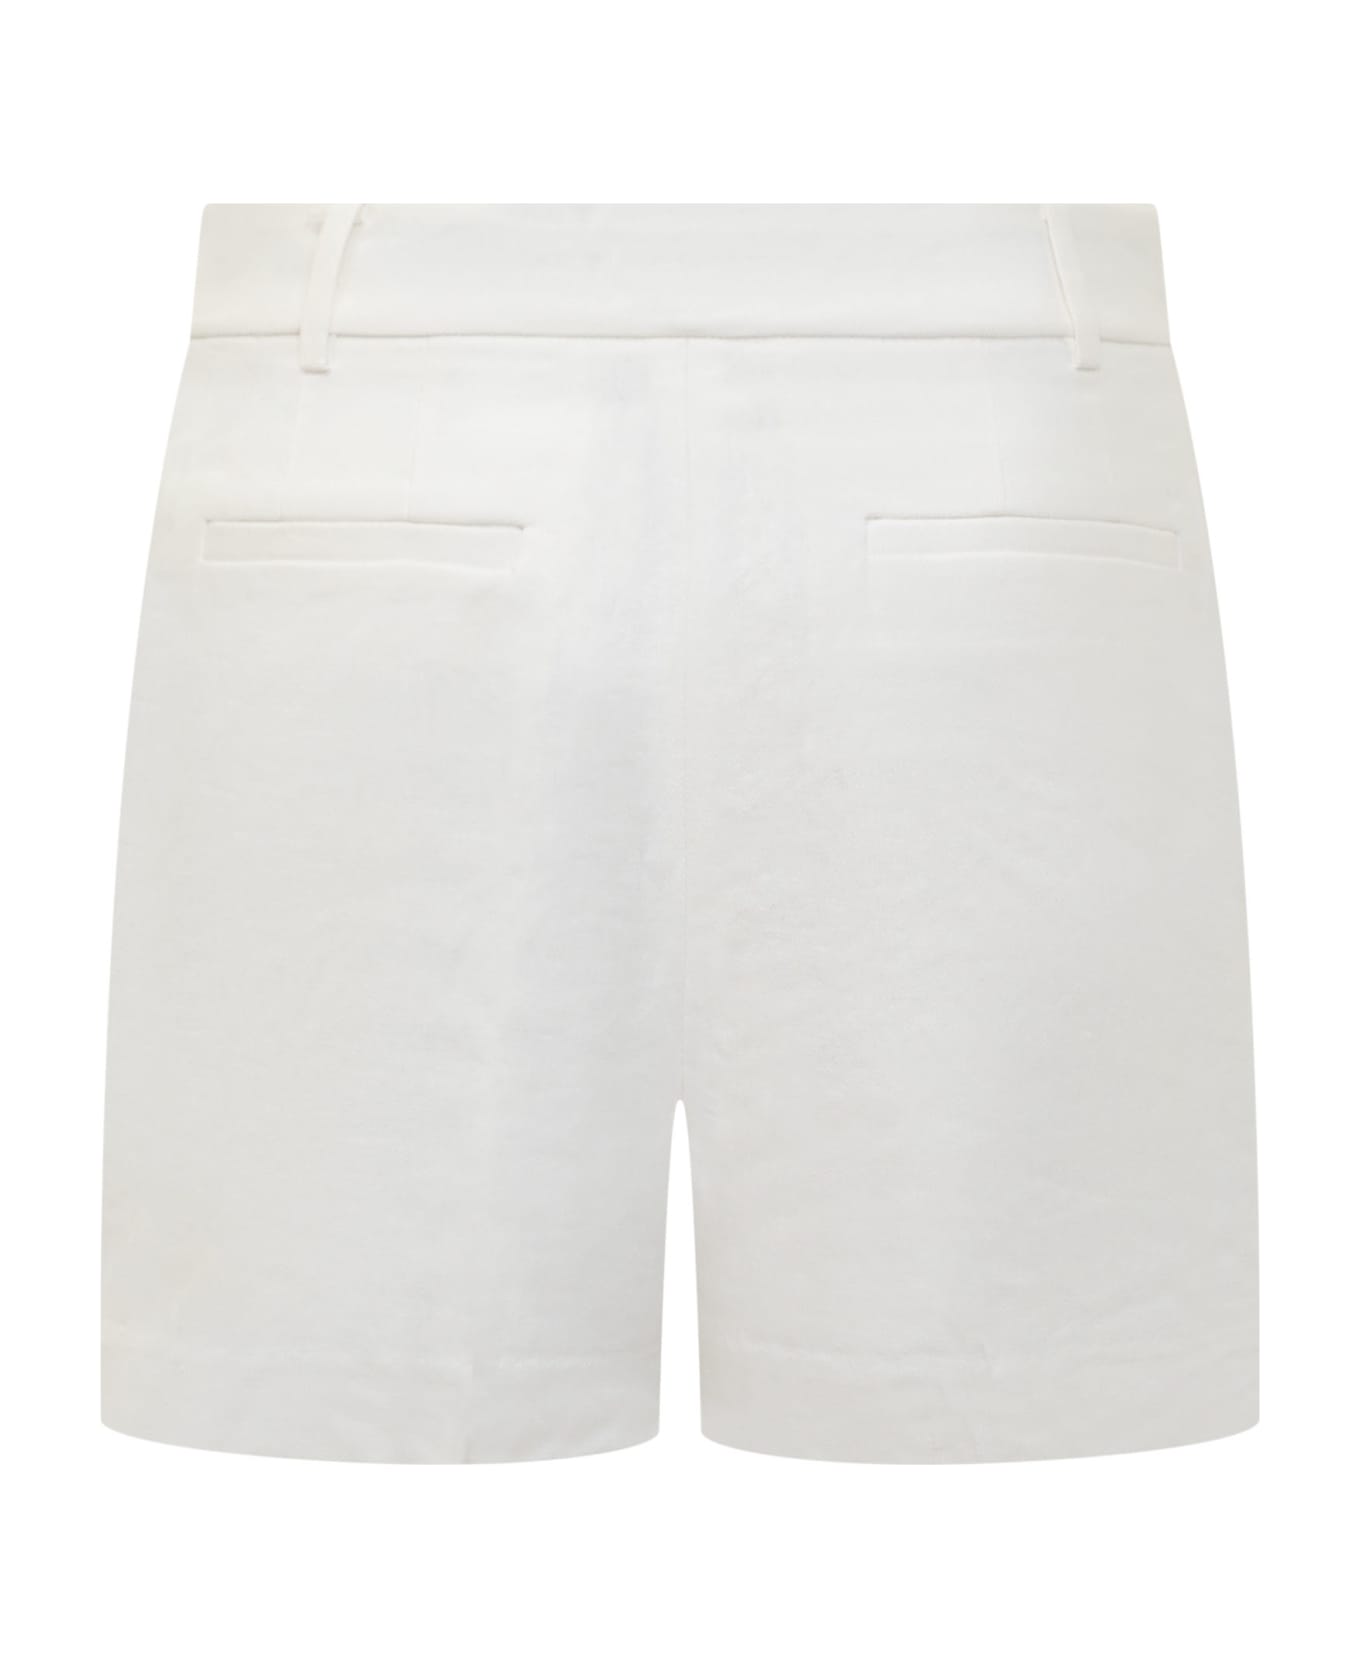 Michael Kors Linen And Viscose Shorts - White